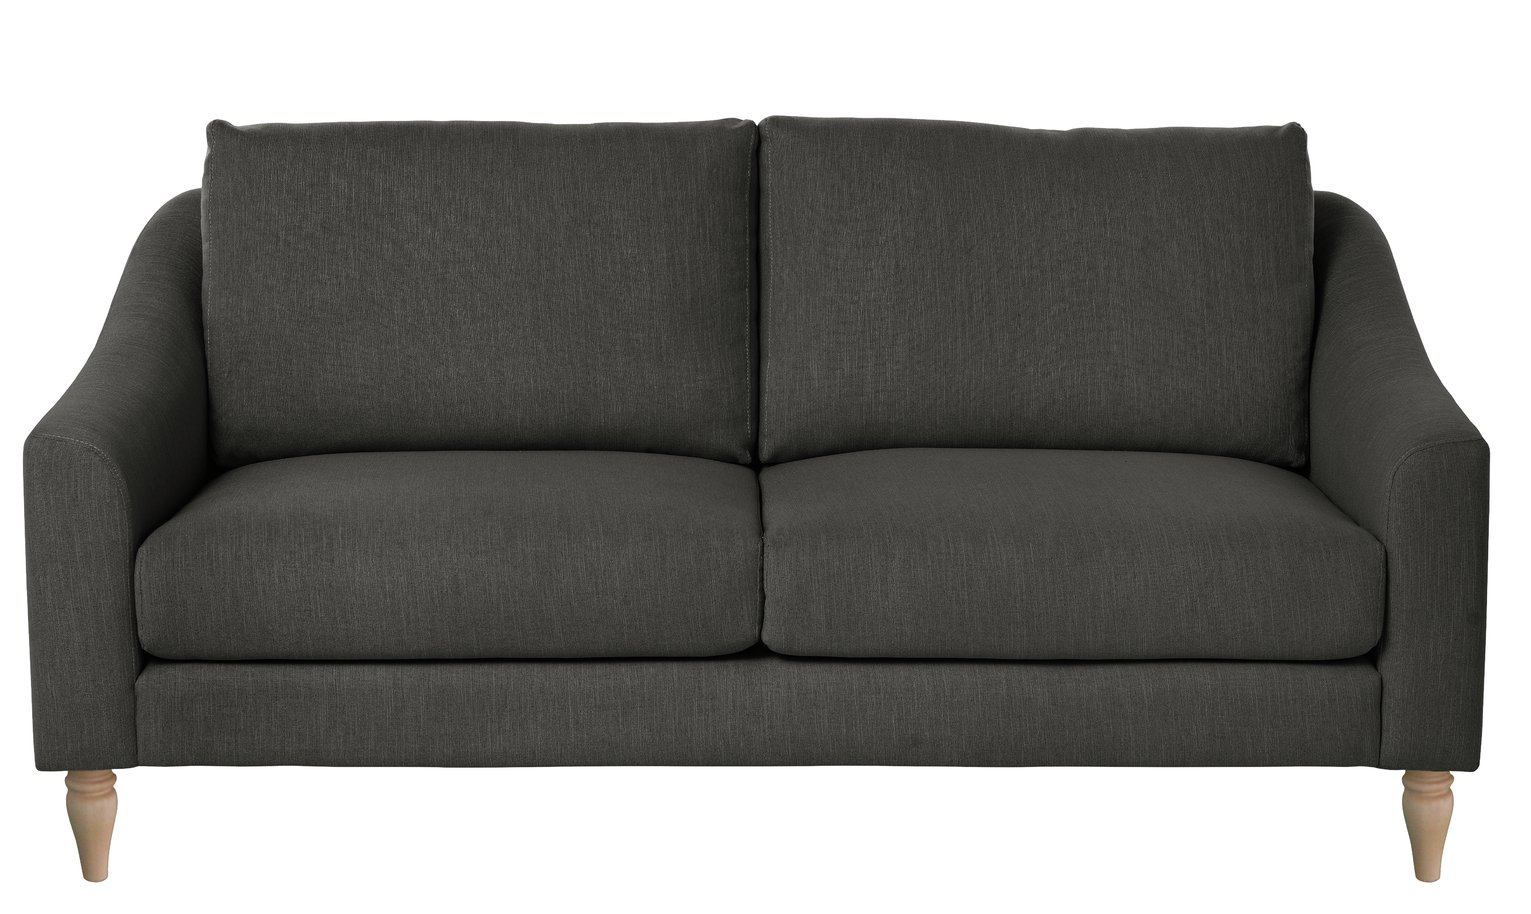 Argos Home Cameron 3 Seater Fabric Sofa - Charcoal